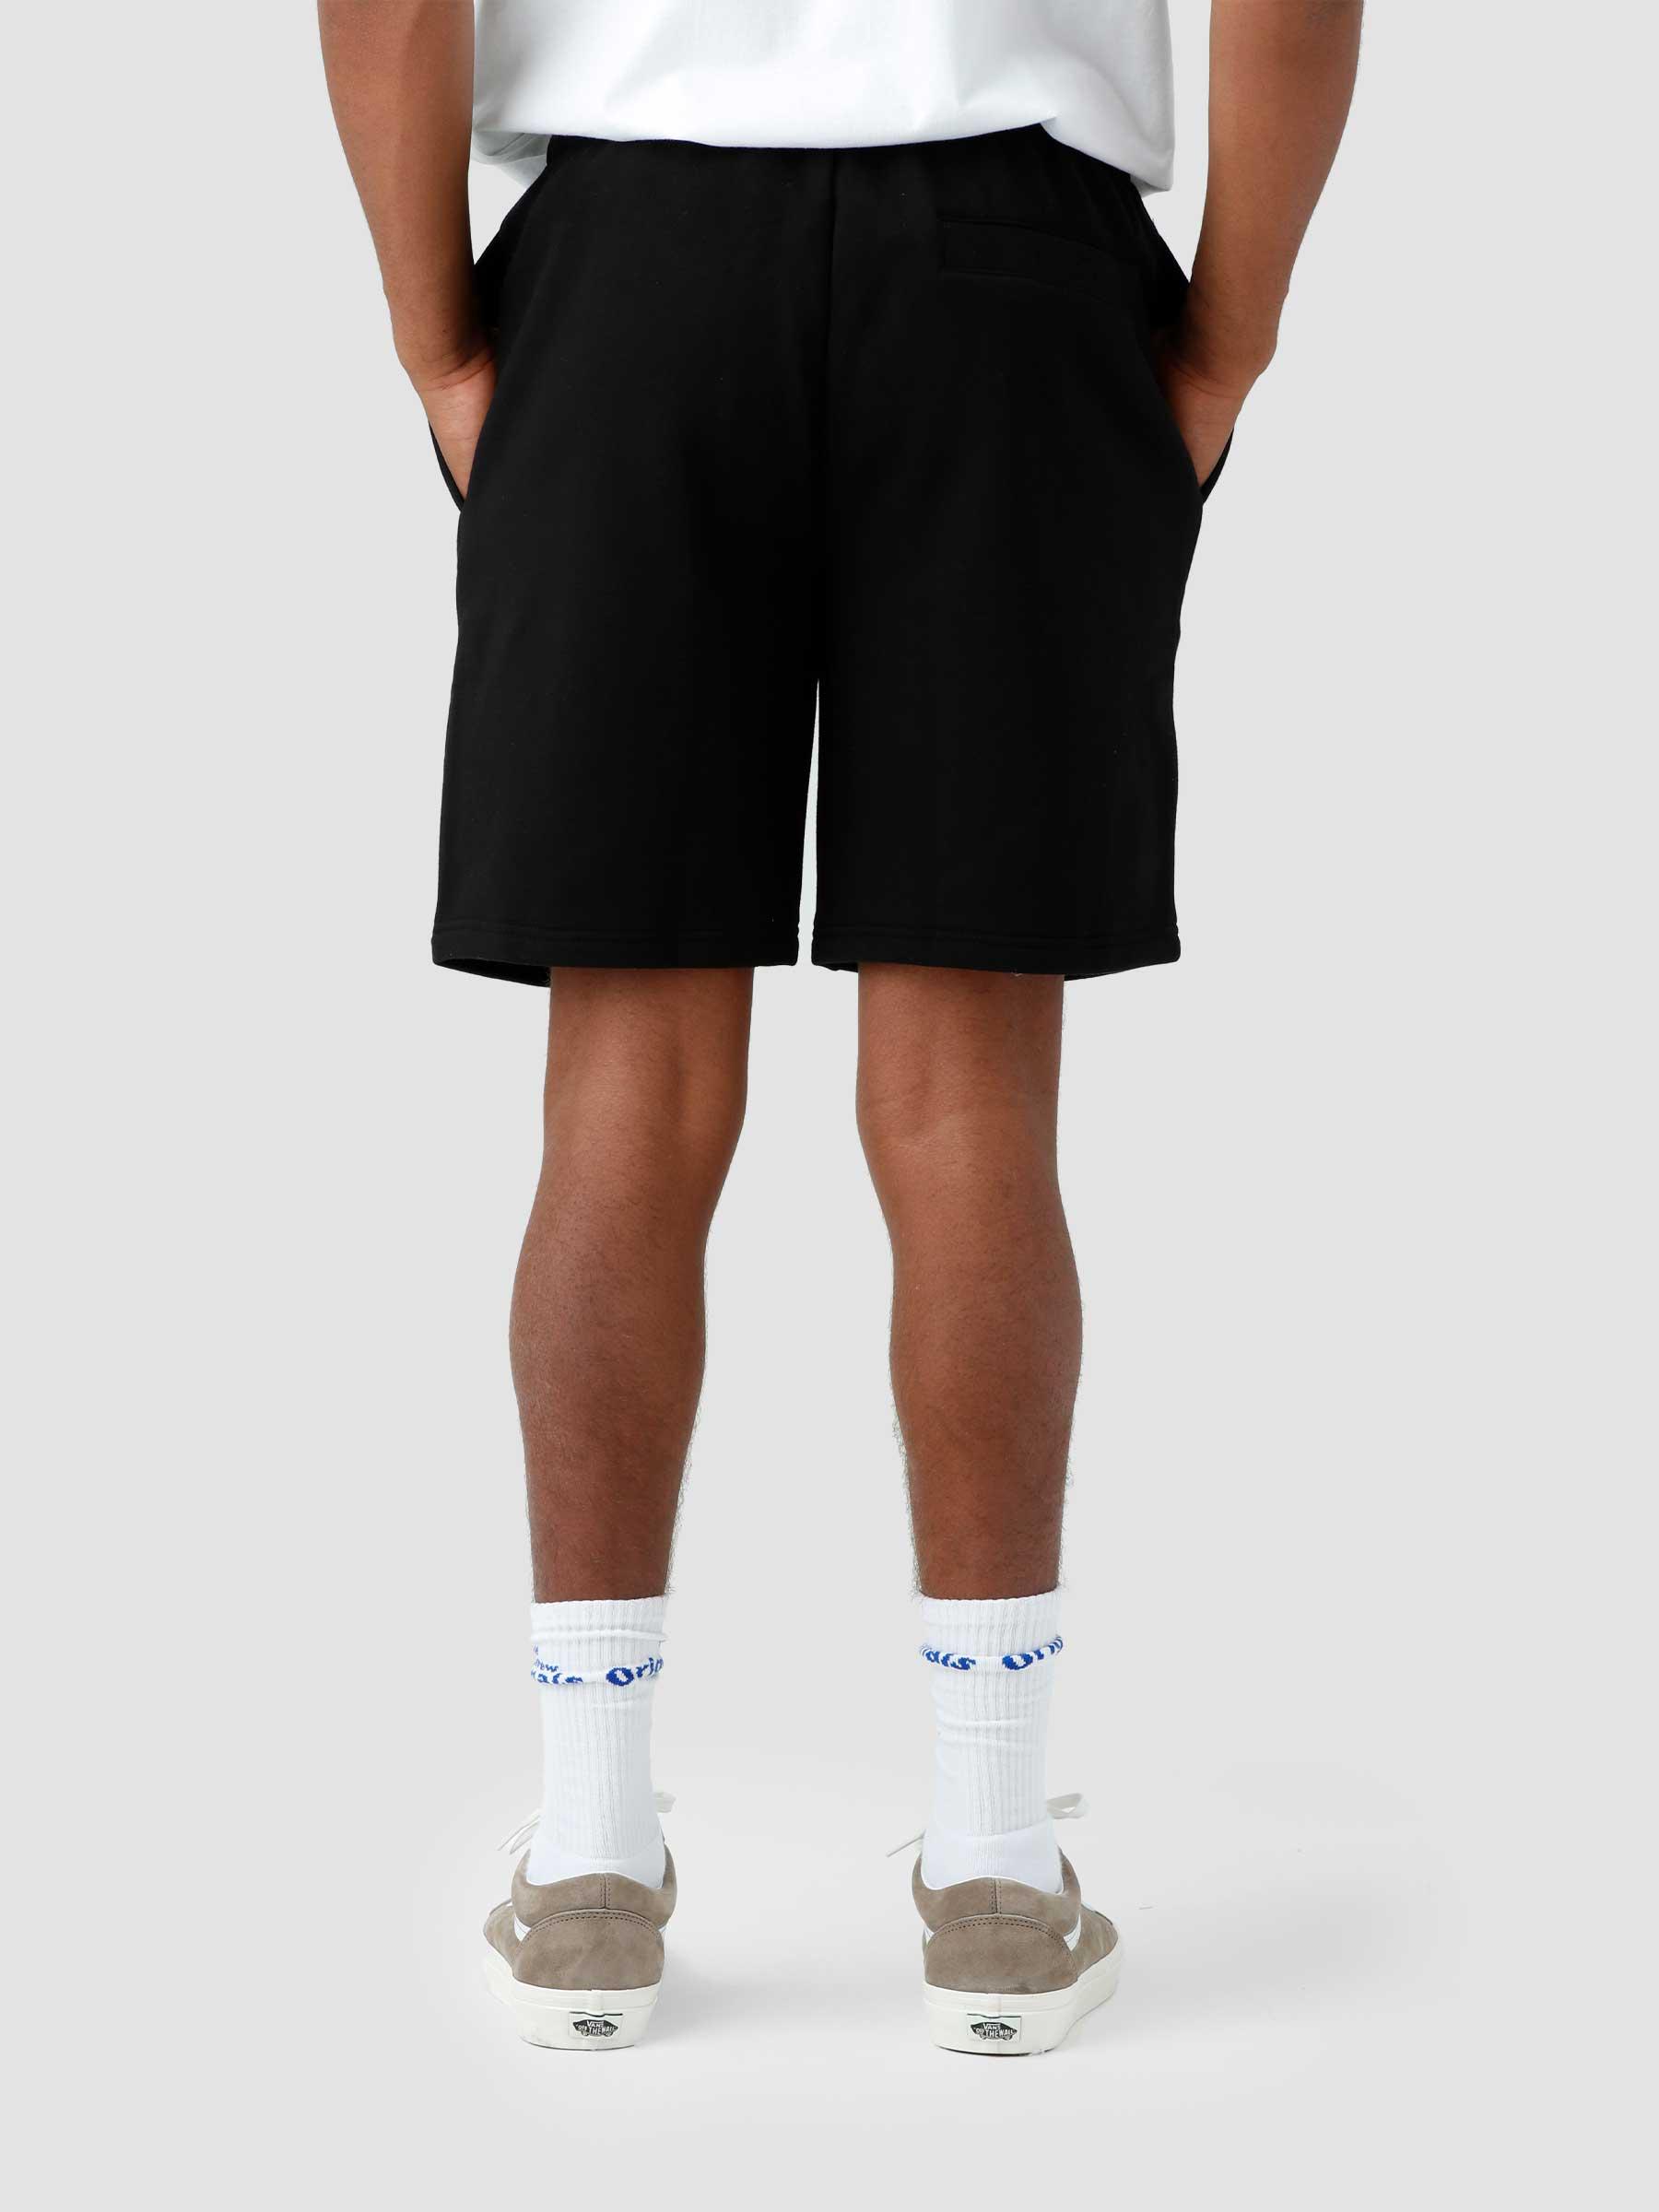 1HG1 Men's Shorts 01 Black GH2136-11